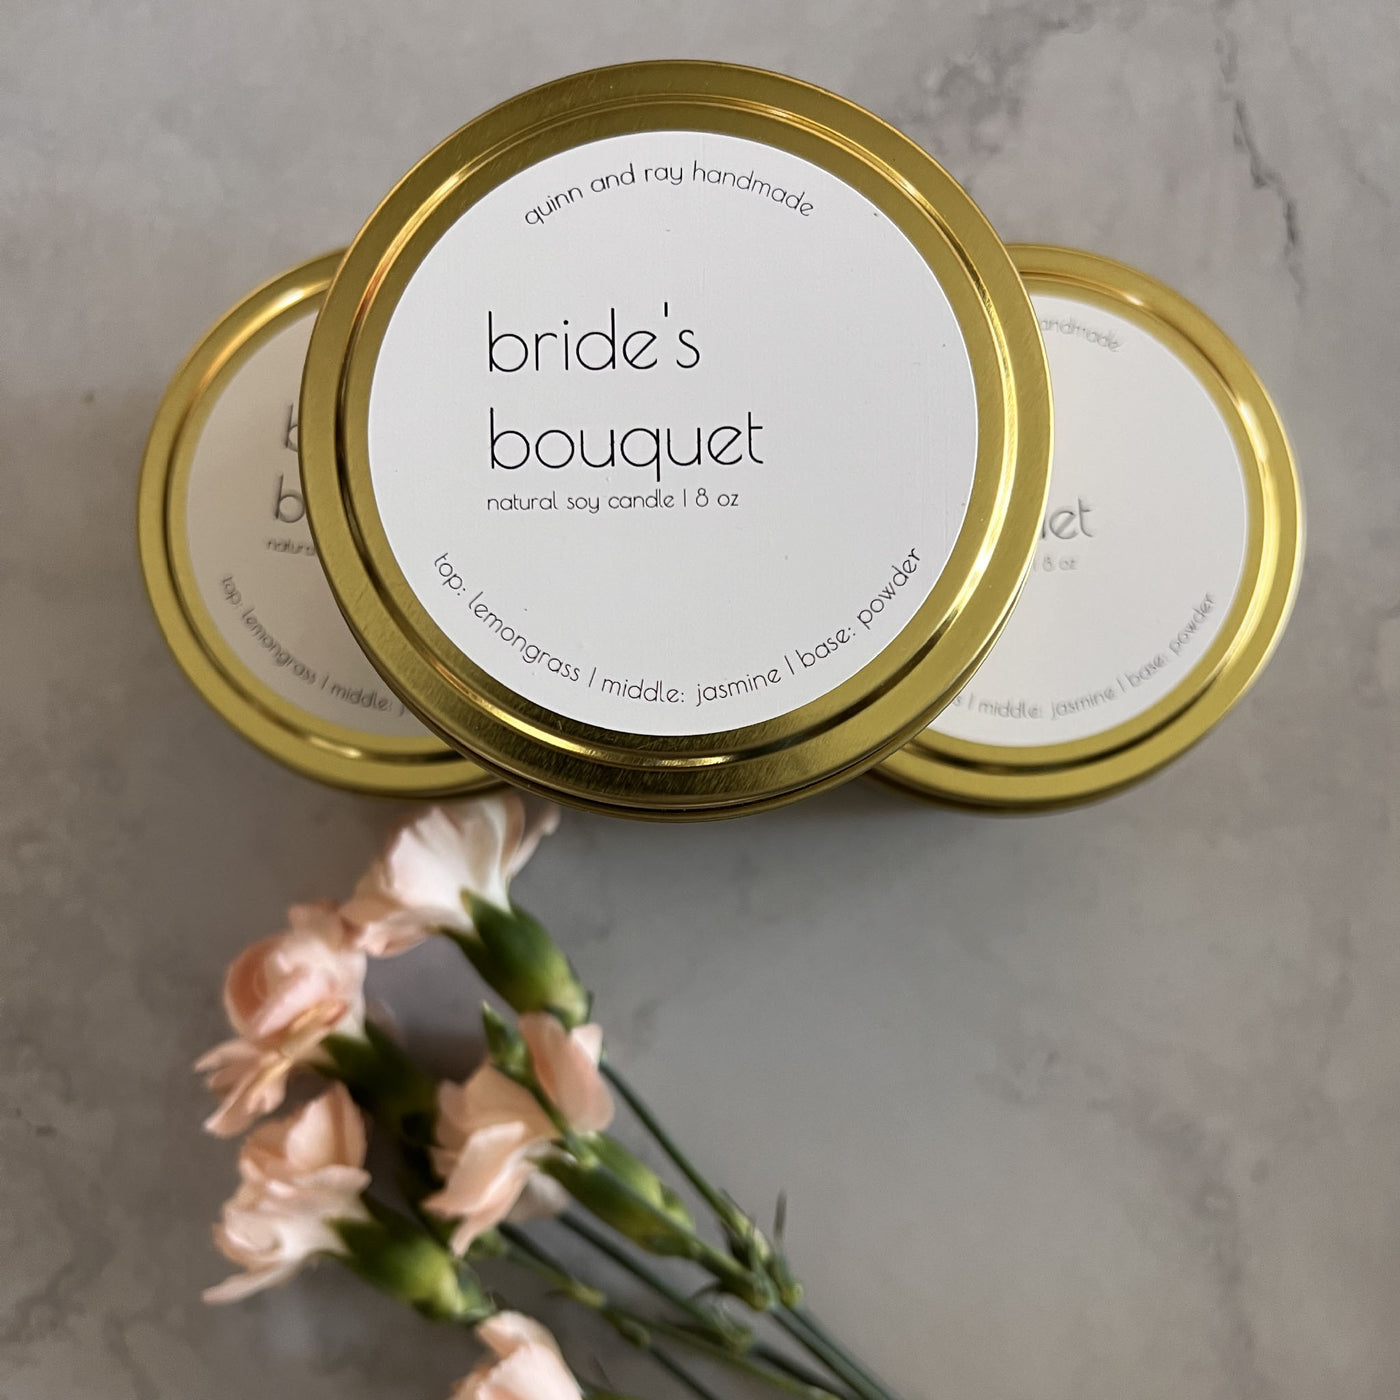 Quinn & Ray Handmade | Bridal Bouquet Candle